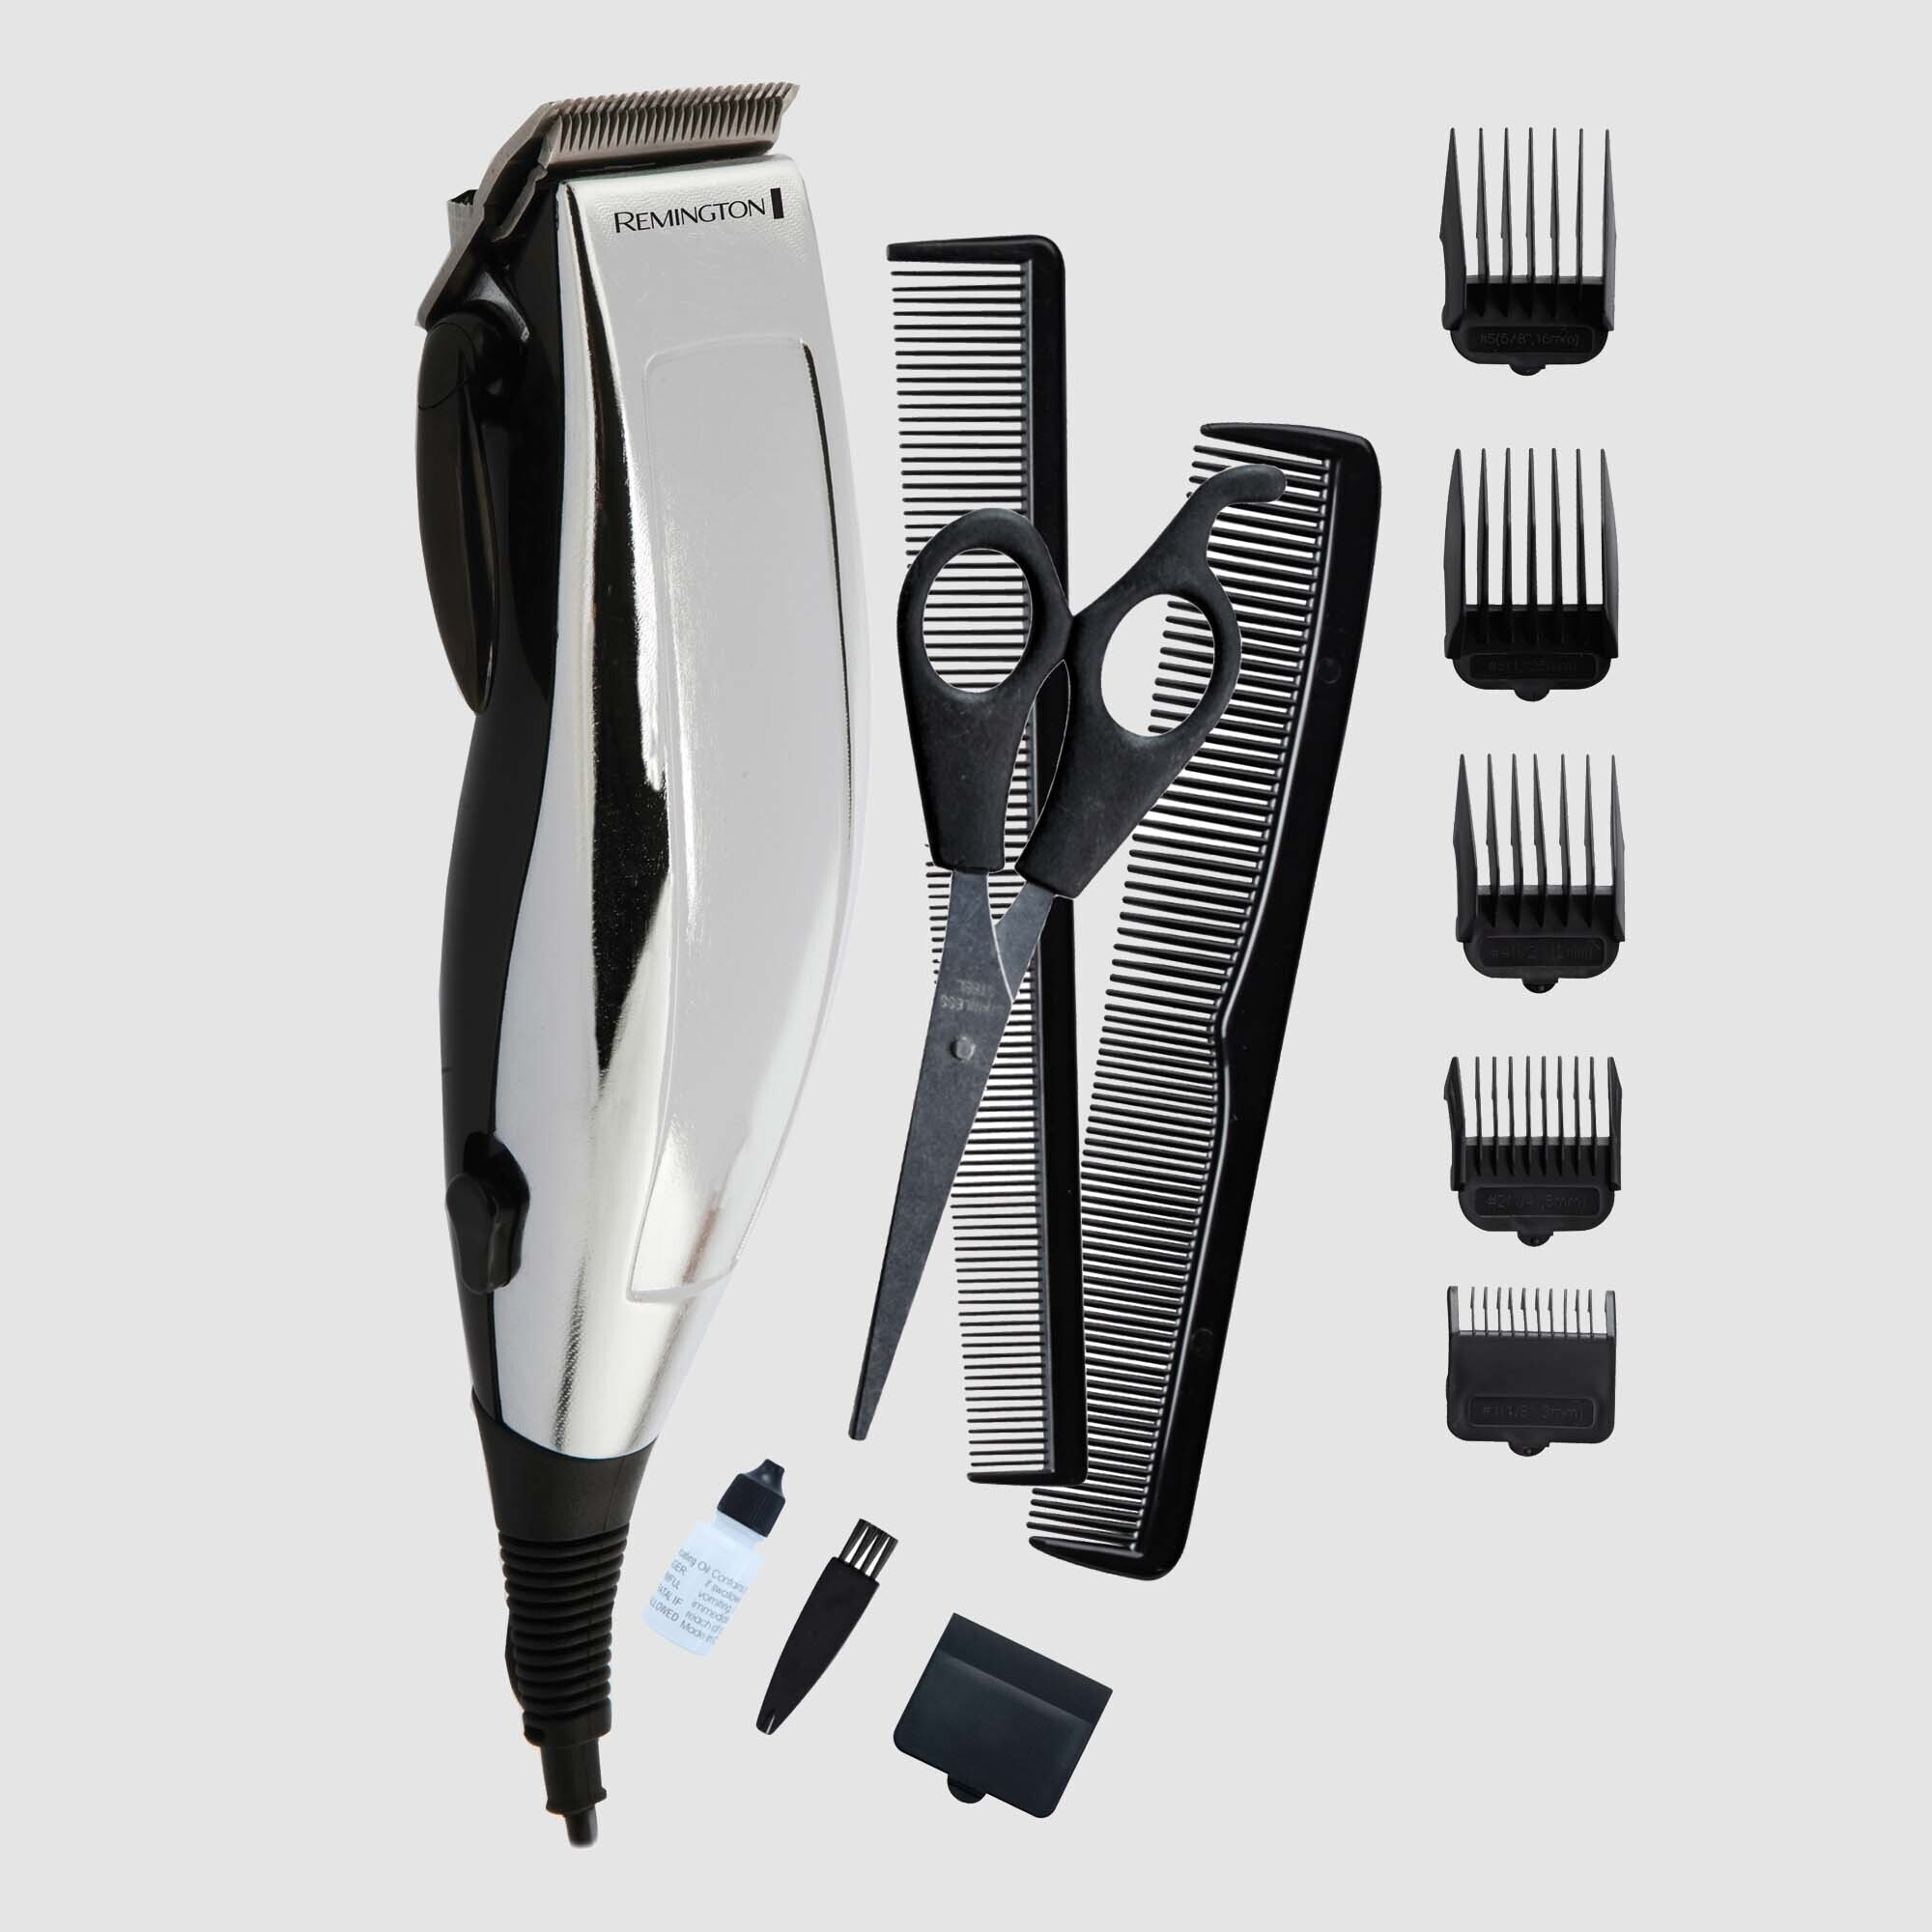 remington high precision haircut kit